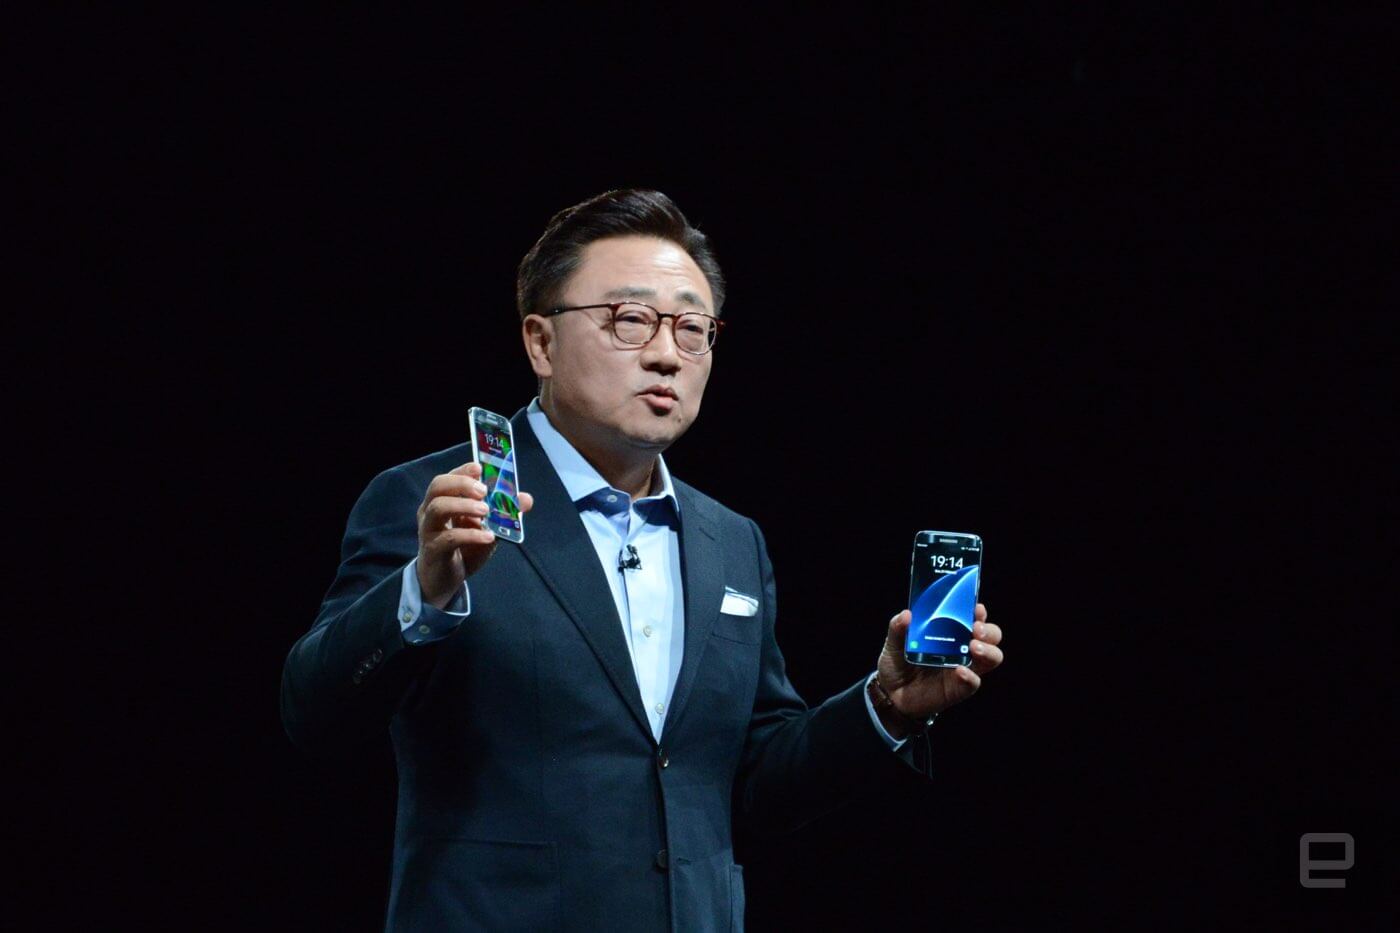 Samsung Galaxy S7 и Edge - состоялся анонс